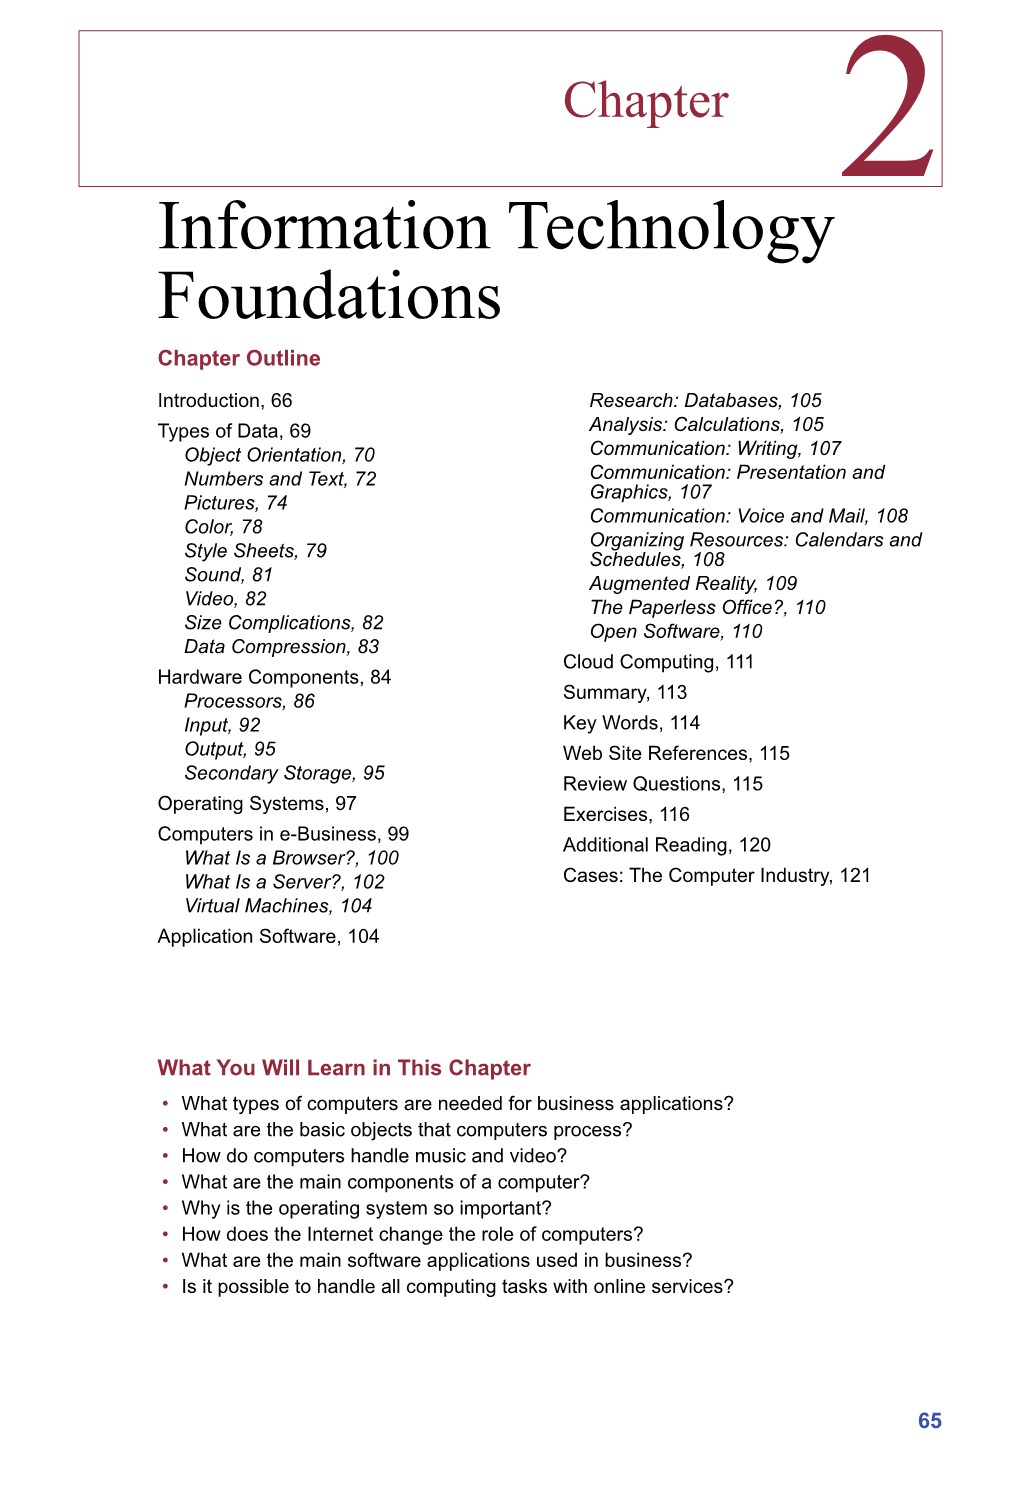 Information Technology Foundations 66